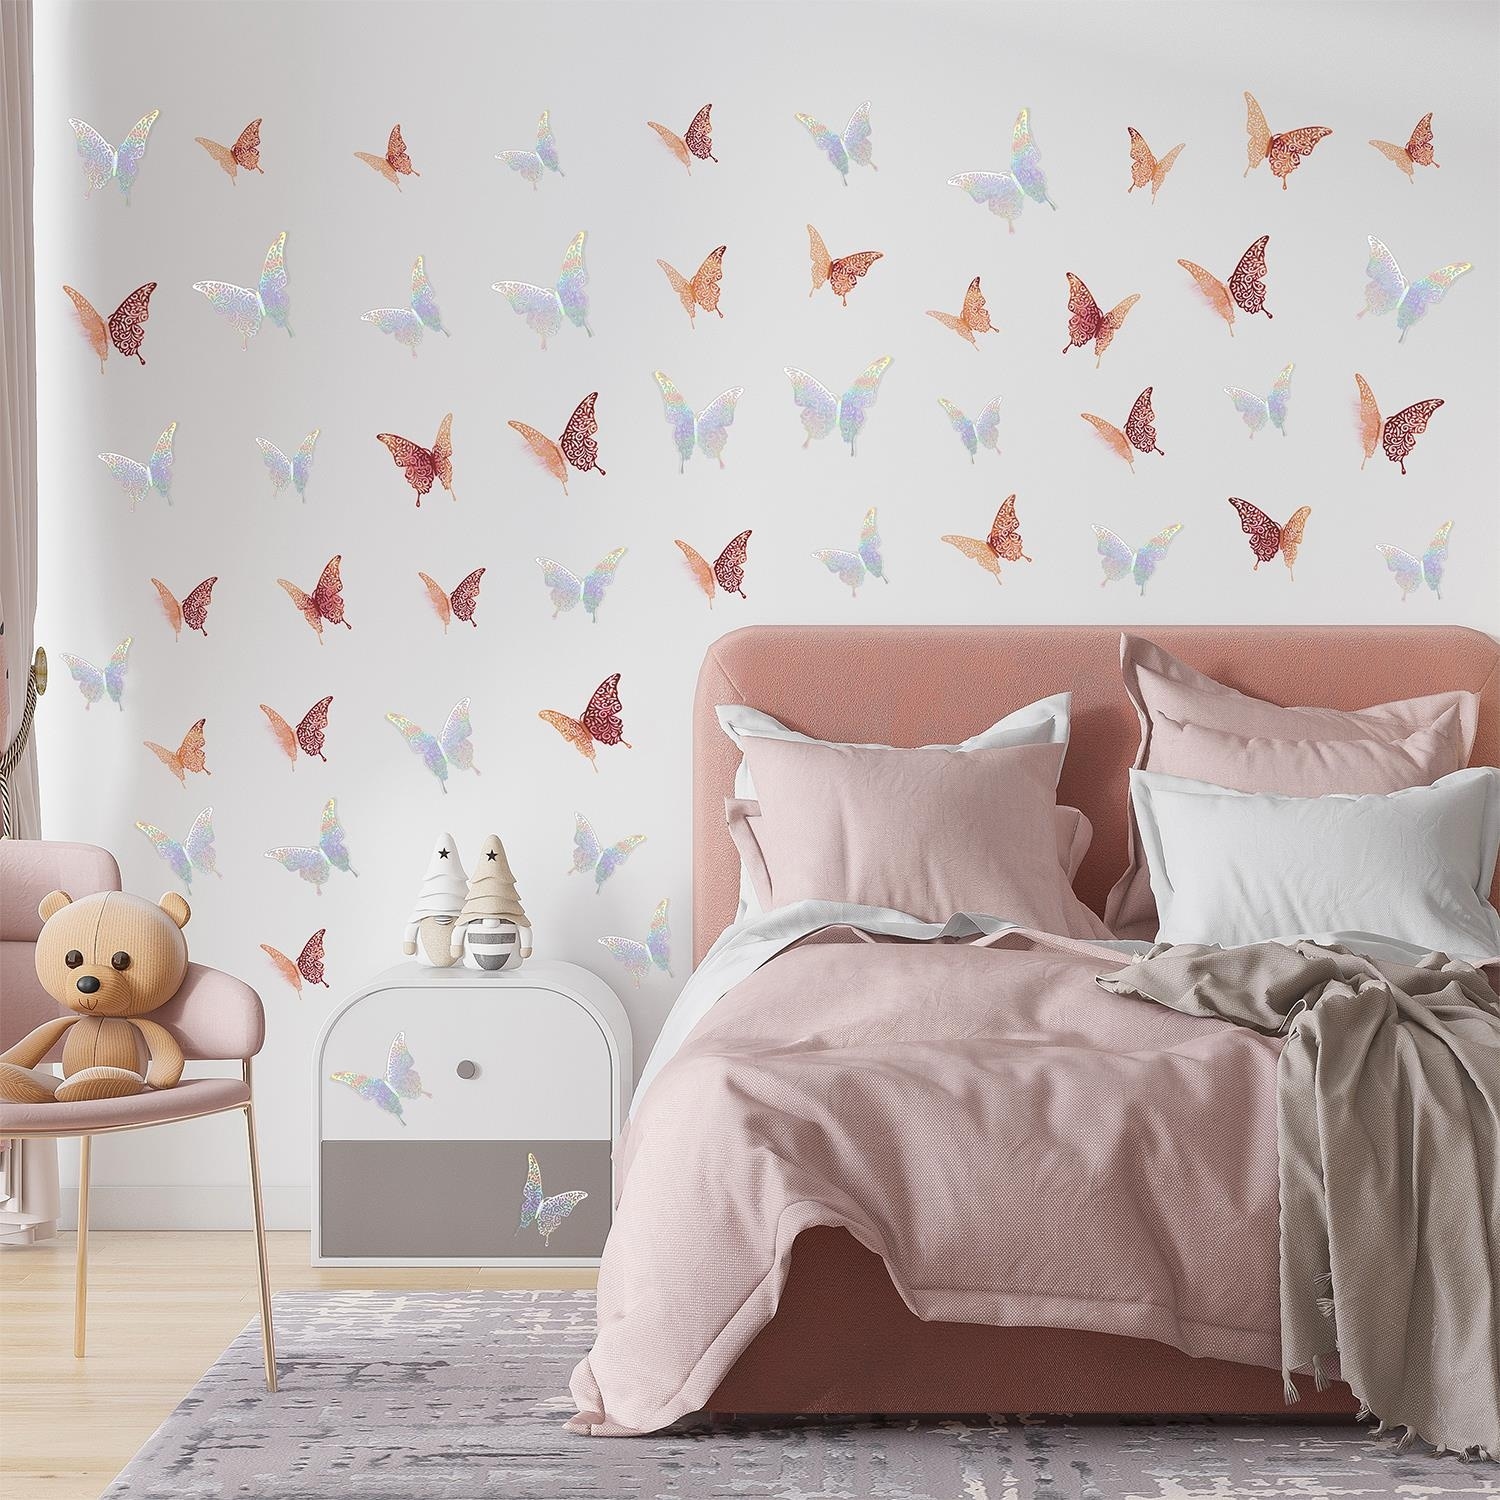 WALPLUS 52pcs 3.1 x 4.5 Multicoloured Floral 3D Butterflies Mix Wall  Decals Stickers Home Decor Removable PVC DIY Art Mural - Bed Bath & Beyond  - 35157490